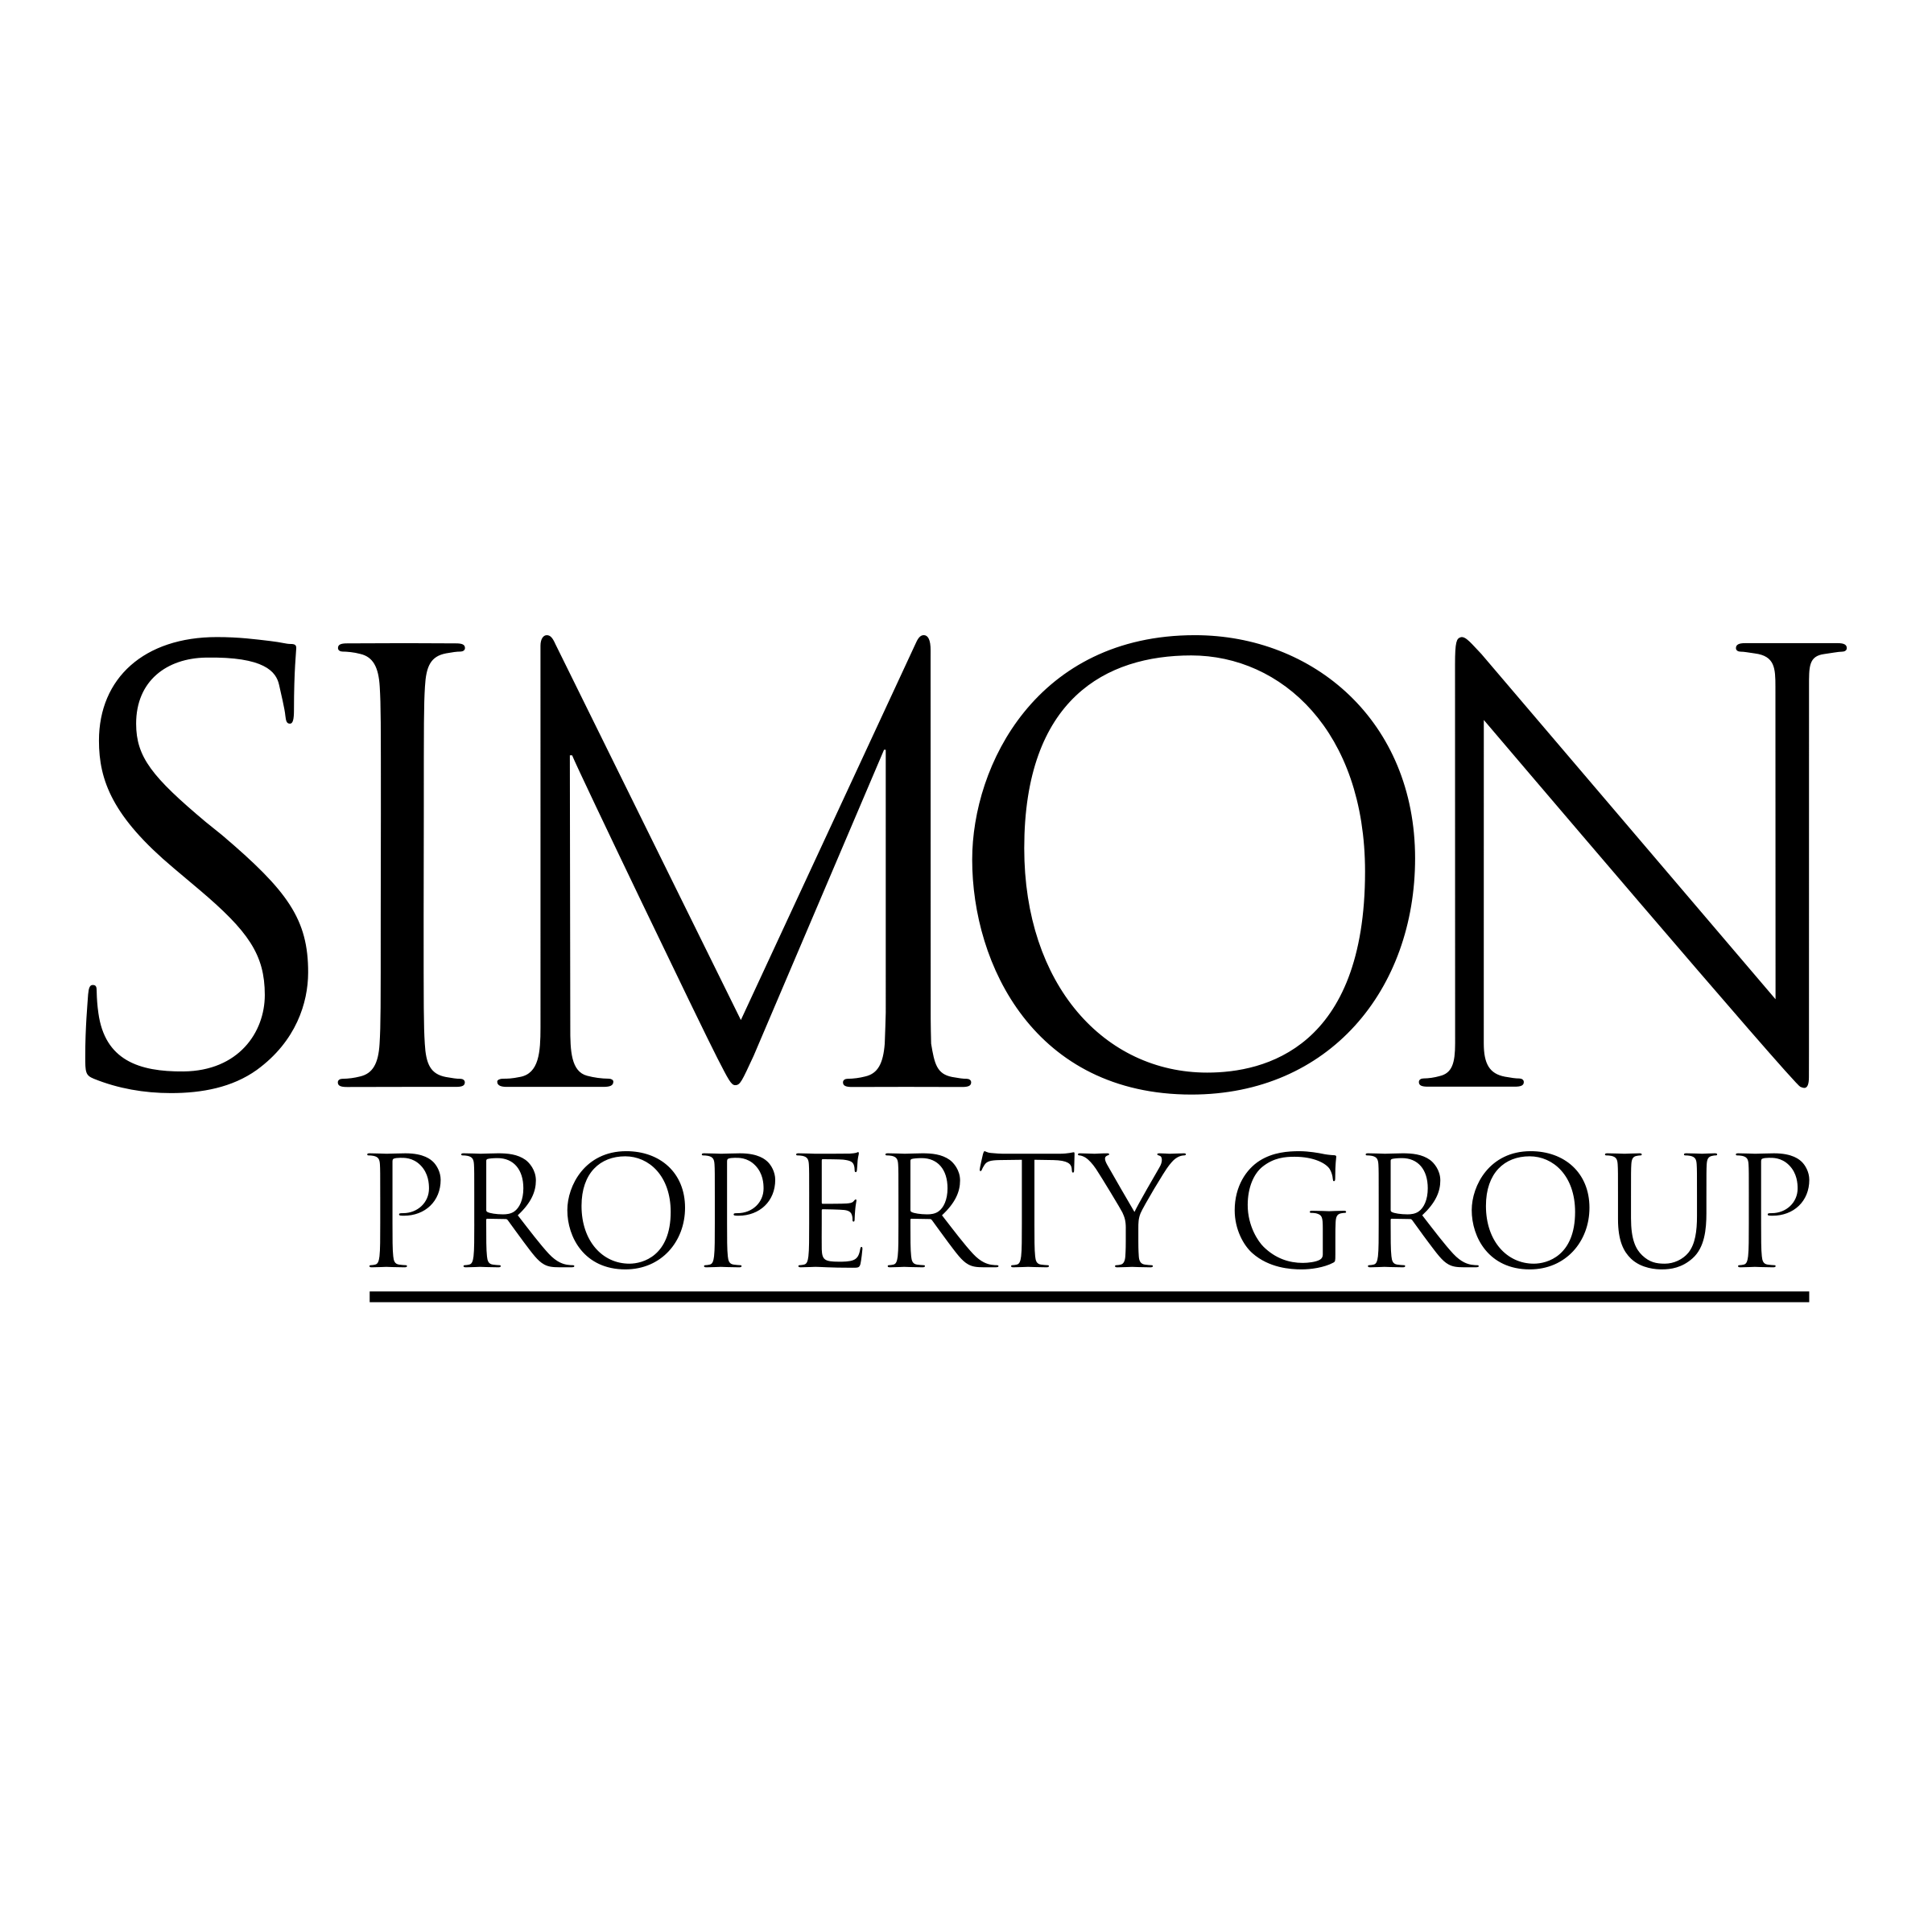 Simon Logo - Simon Property Group Logo PNG Transparent & SVG Vector - Freebie Supply